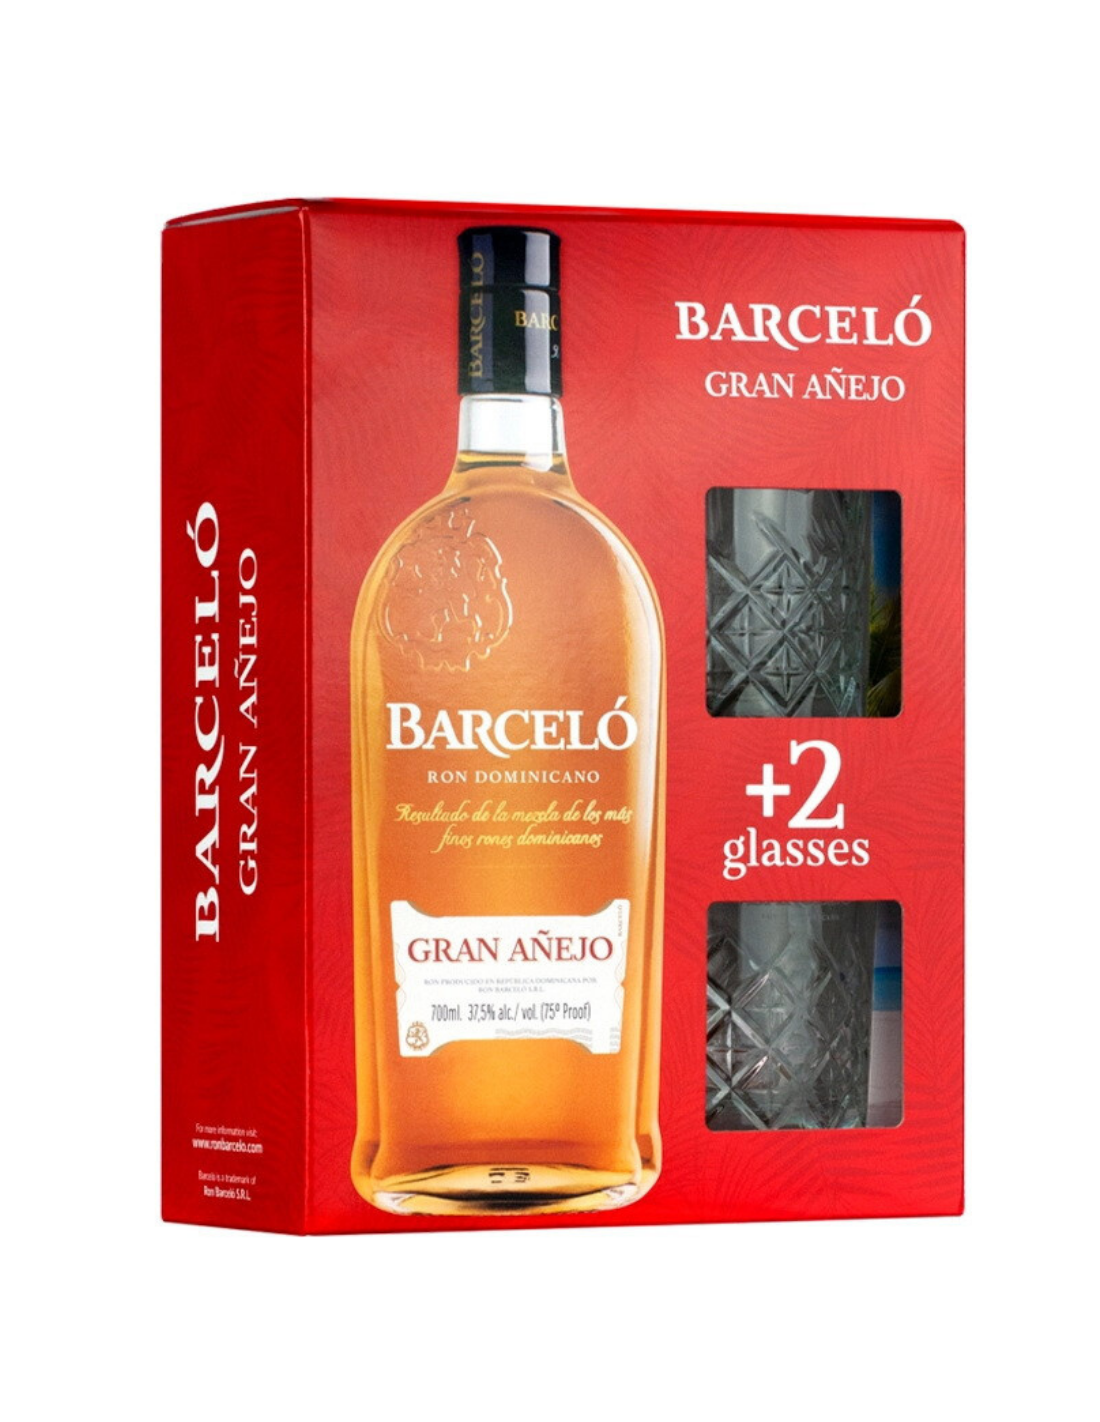 Rom negru Barcelo Gran Anejo + 2 Pahare, 37.5% alc., 0.7L, Republica Dominicana alcooldiscount.ro